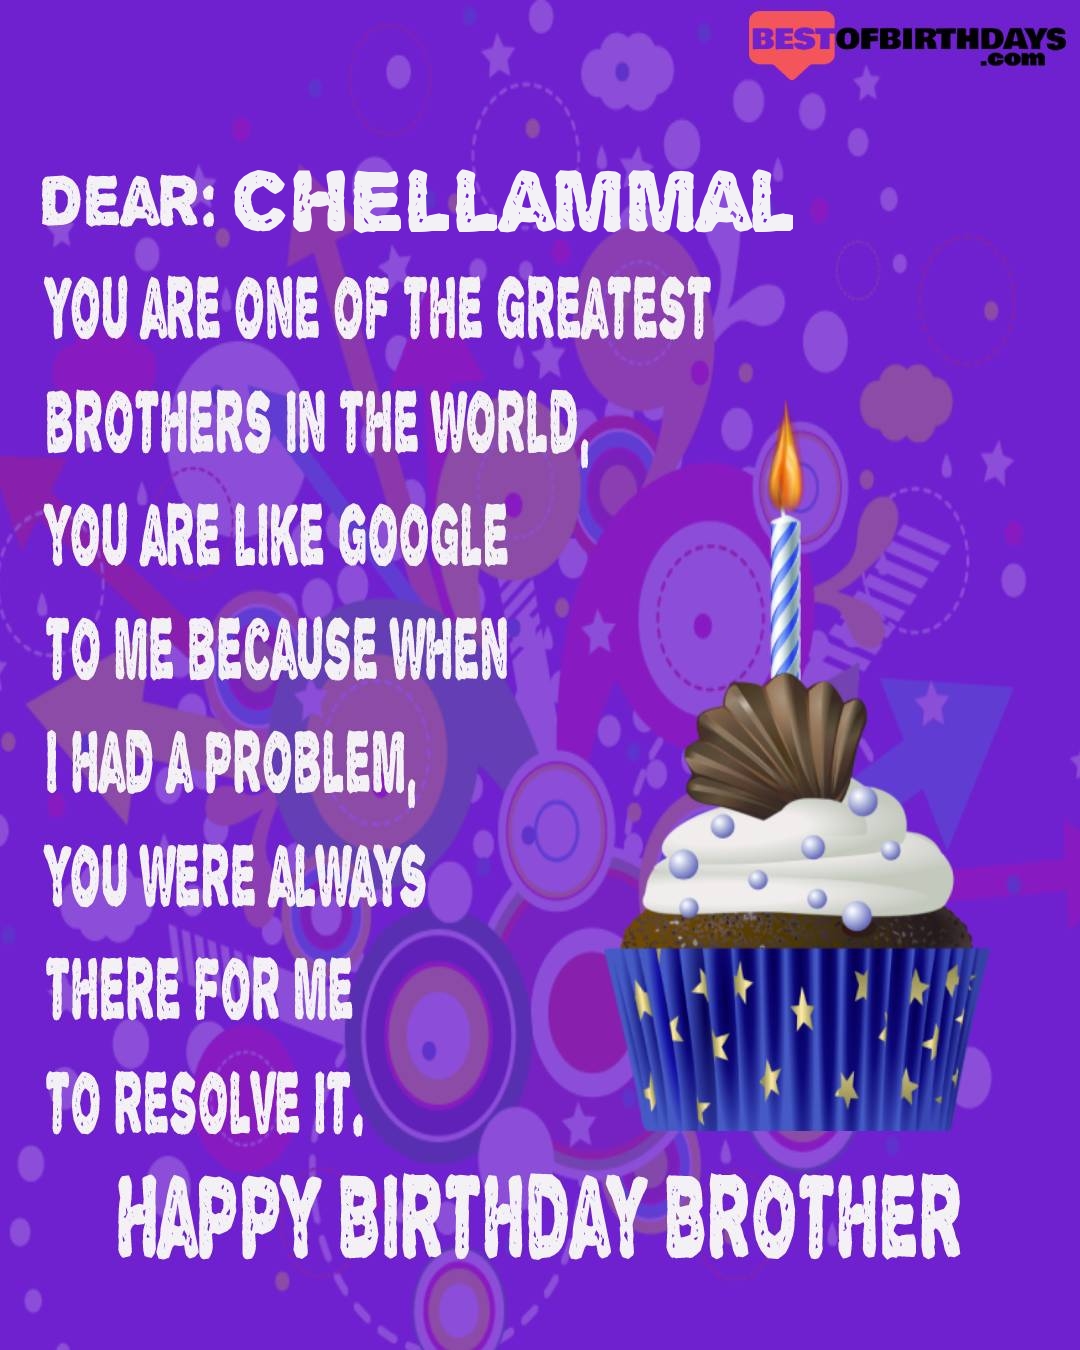 Happy birthday chellammal bhai brother bro